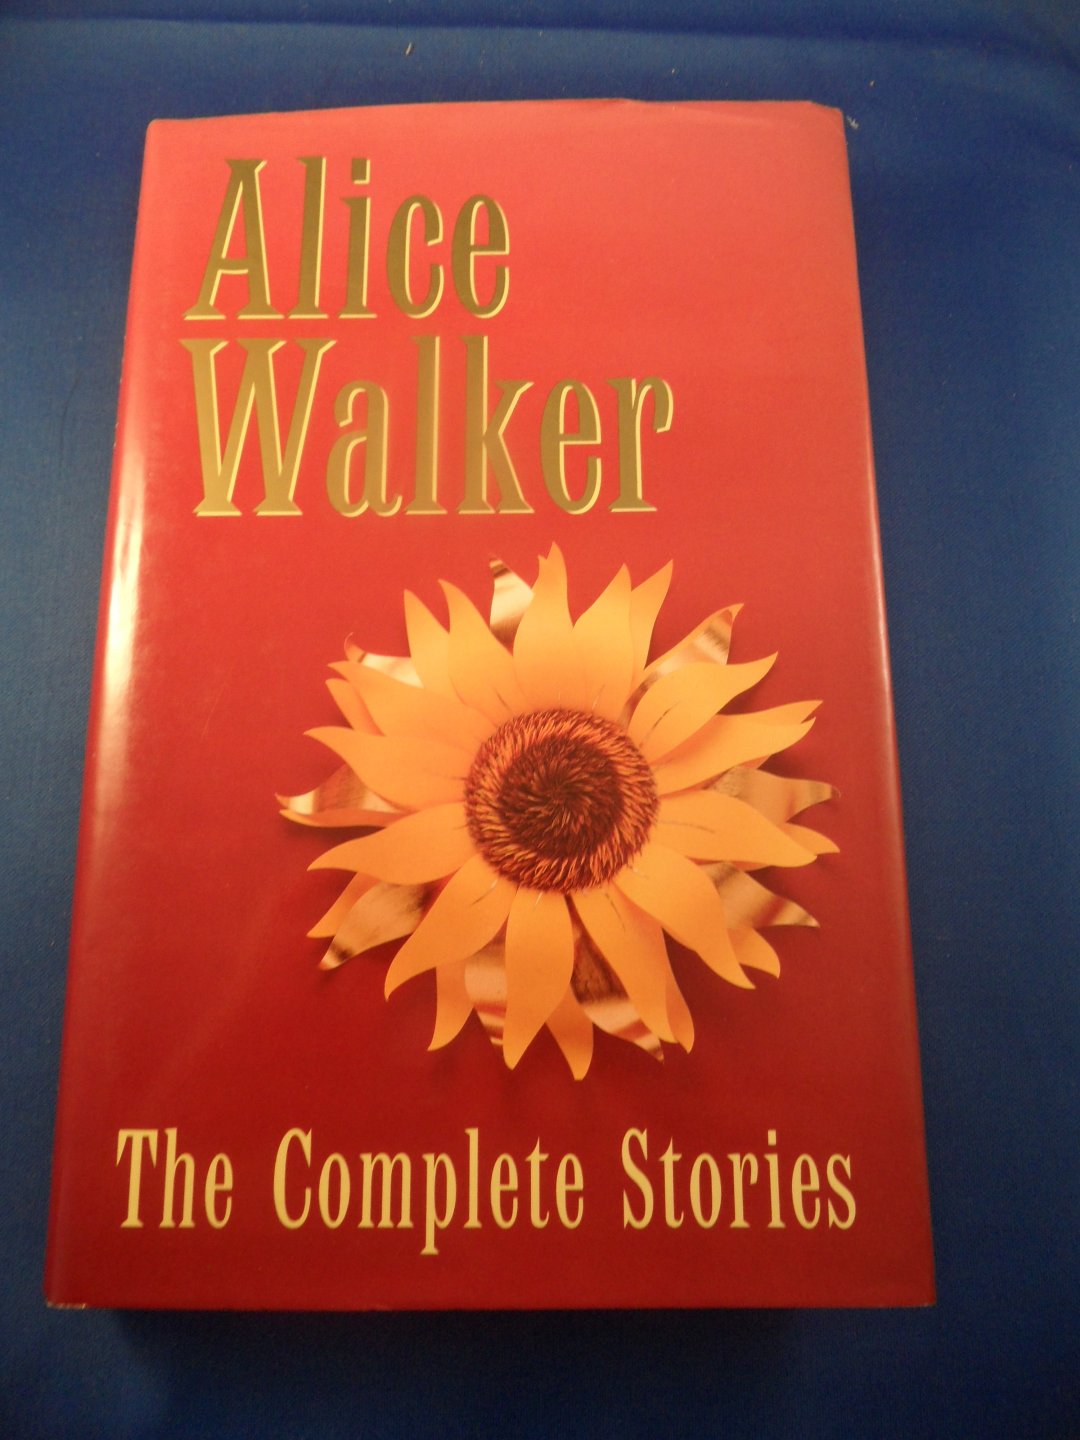 Walker, Alice - The Complete Stories